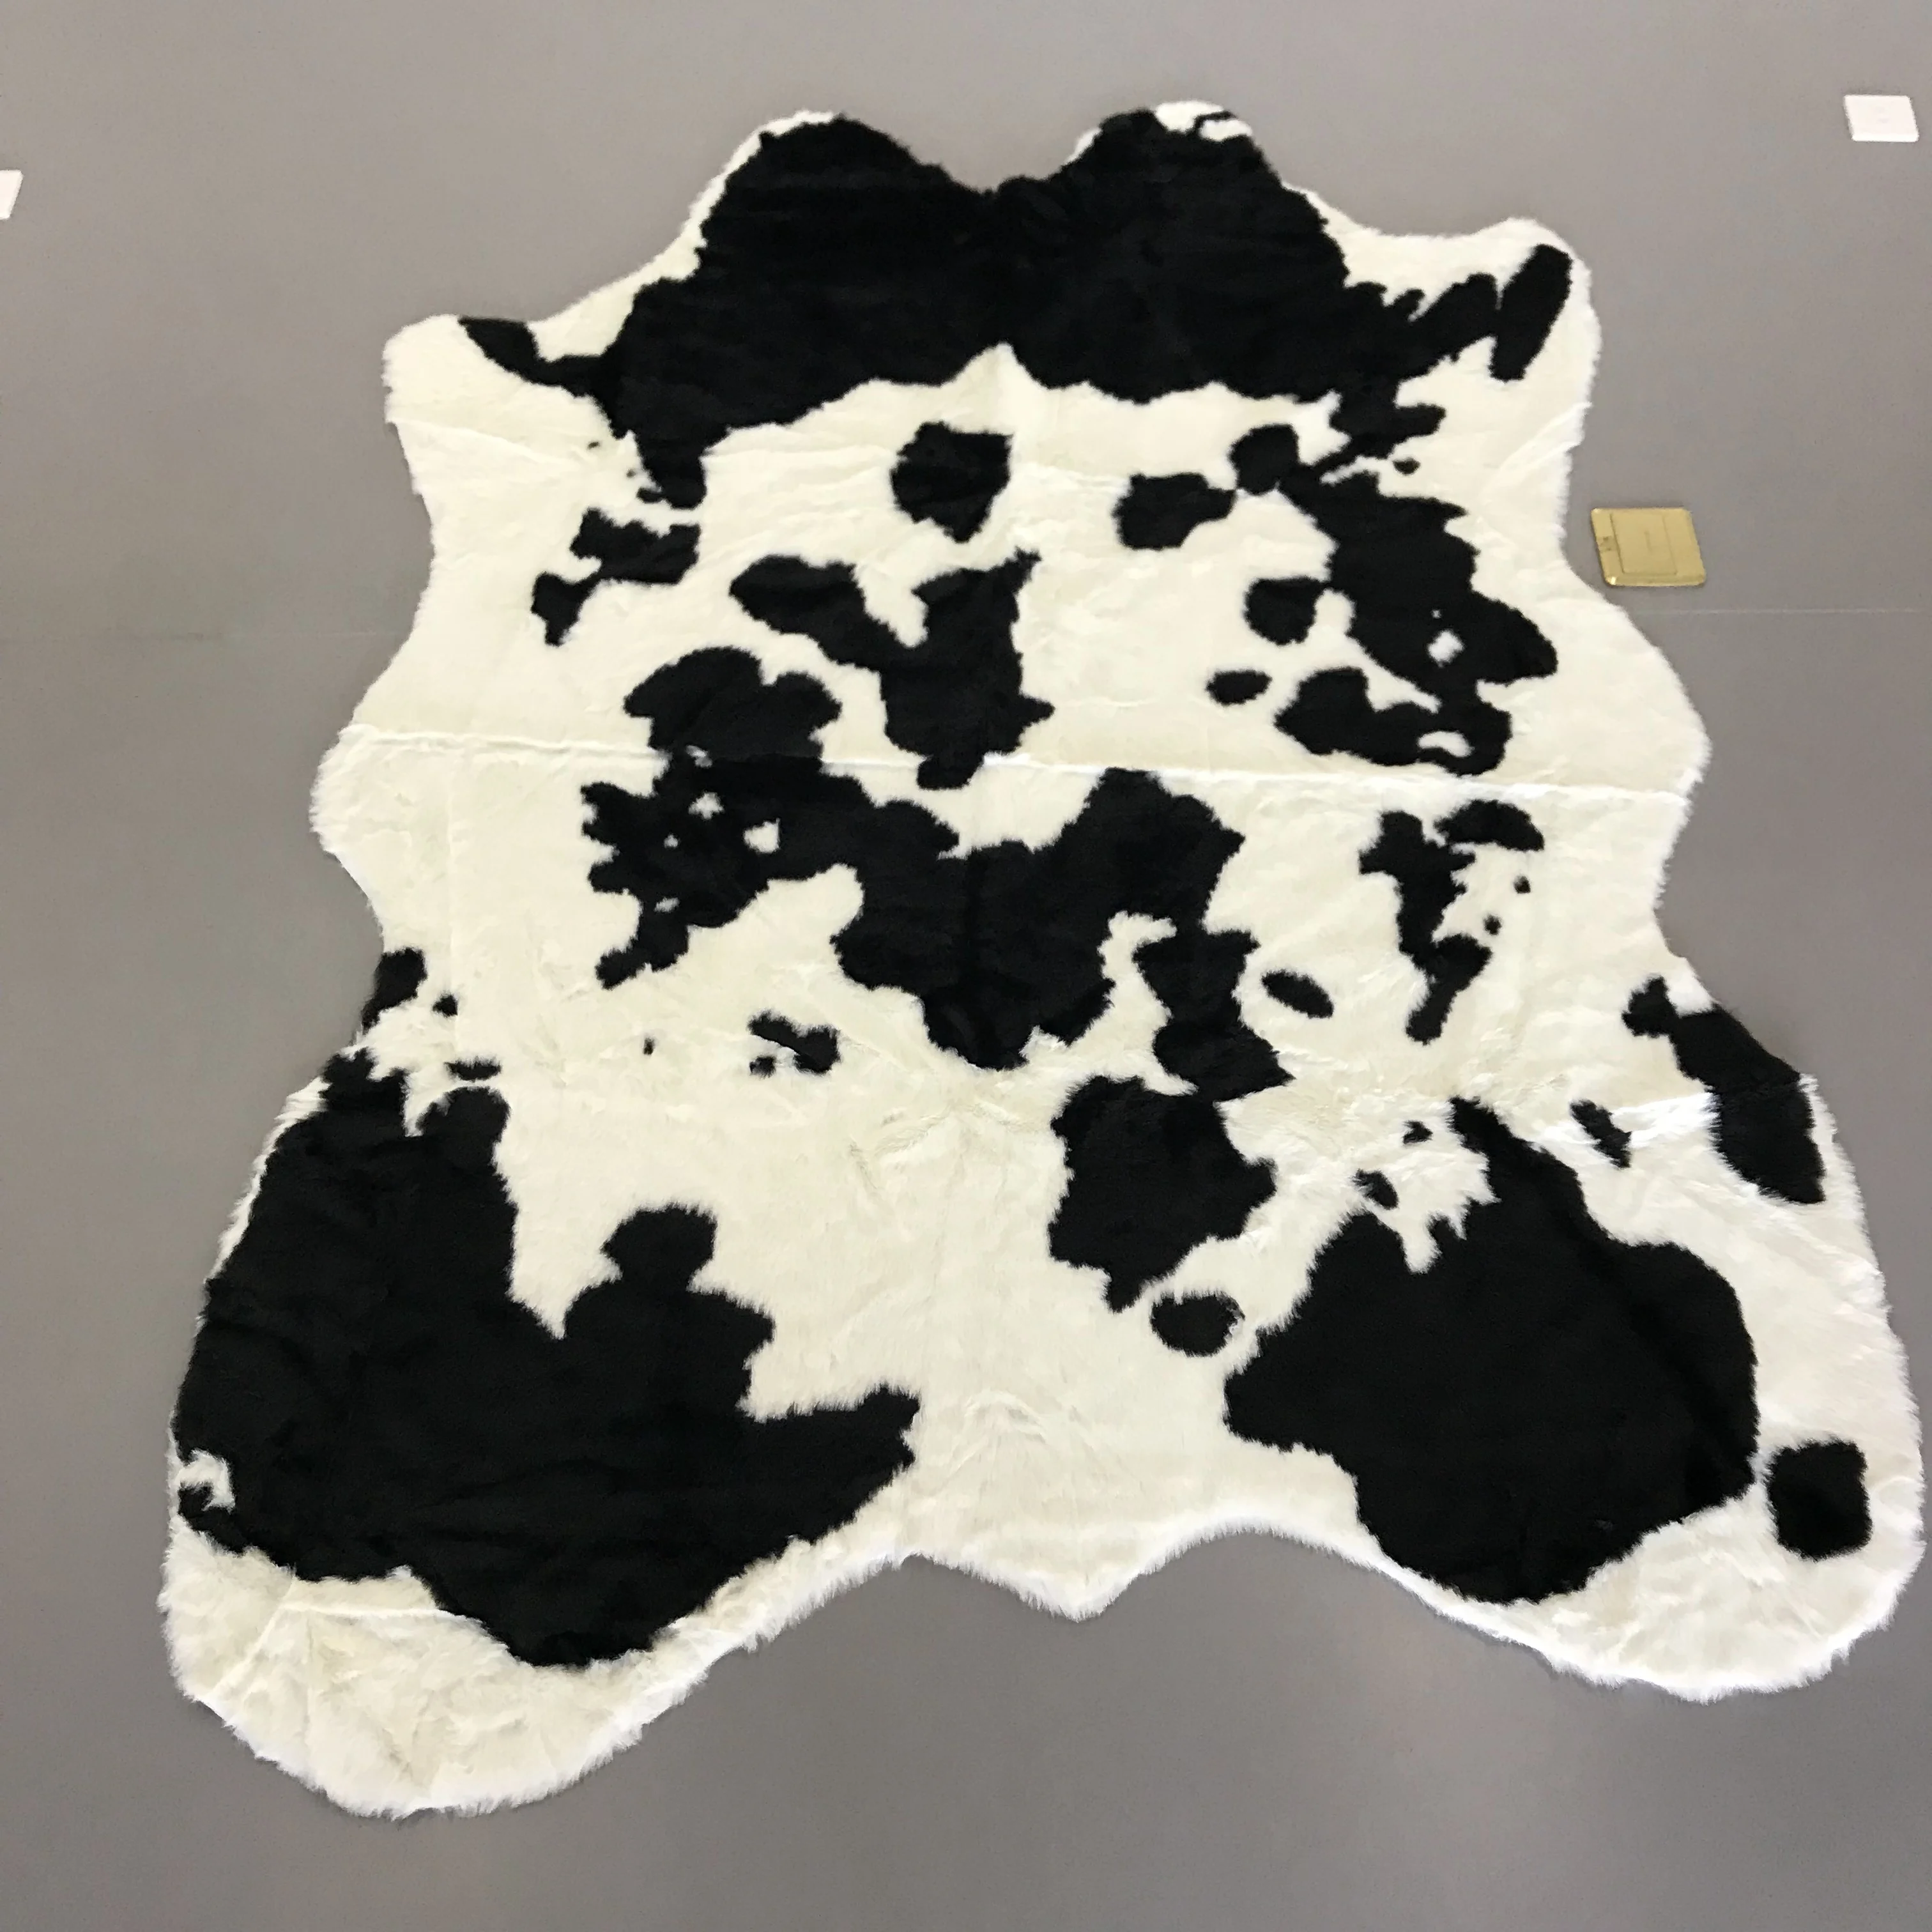 Wholesale Price Cow Hide Carpet Real Cowhide Leather Rug Buy